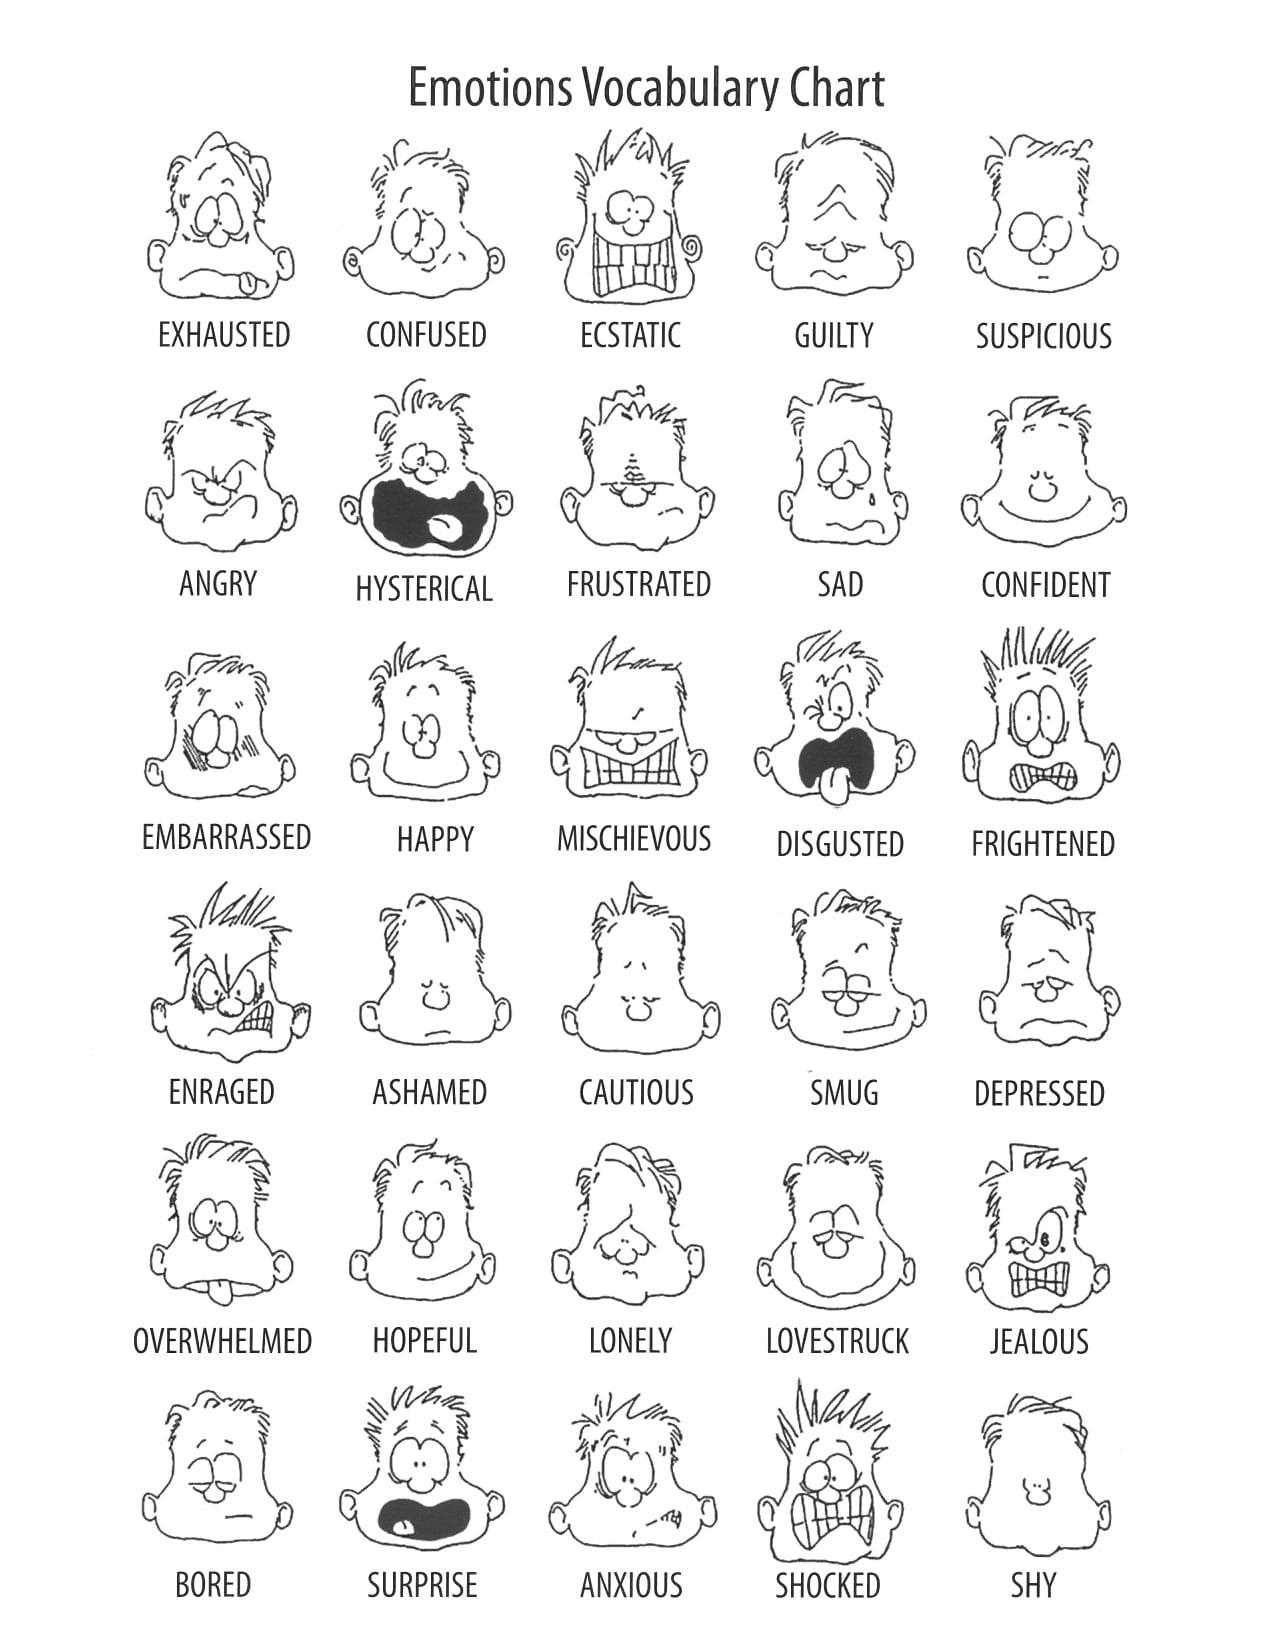 Emotions Vocabulary Chart